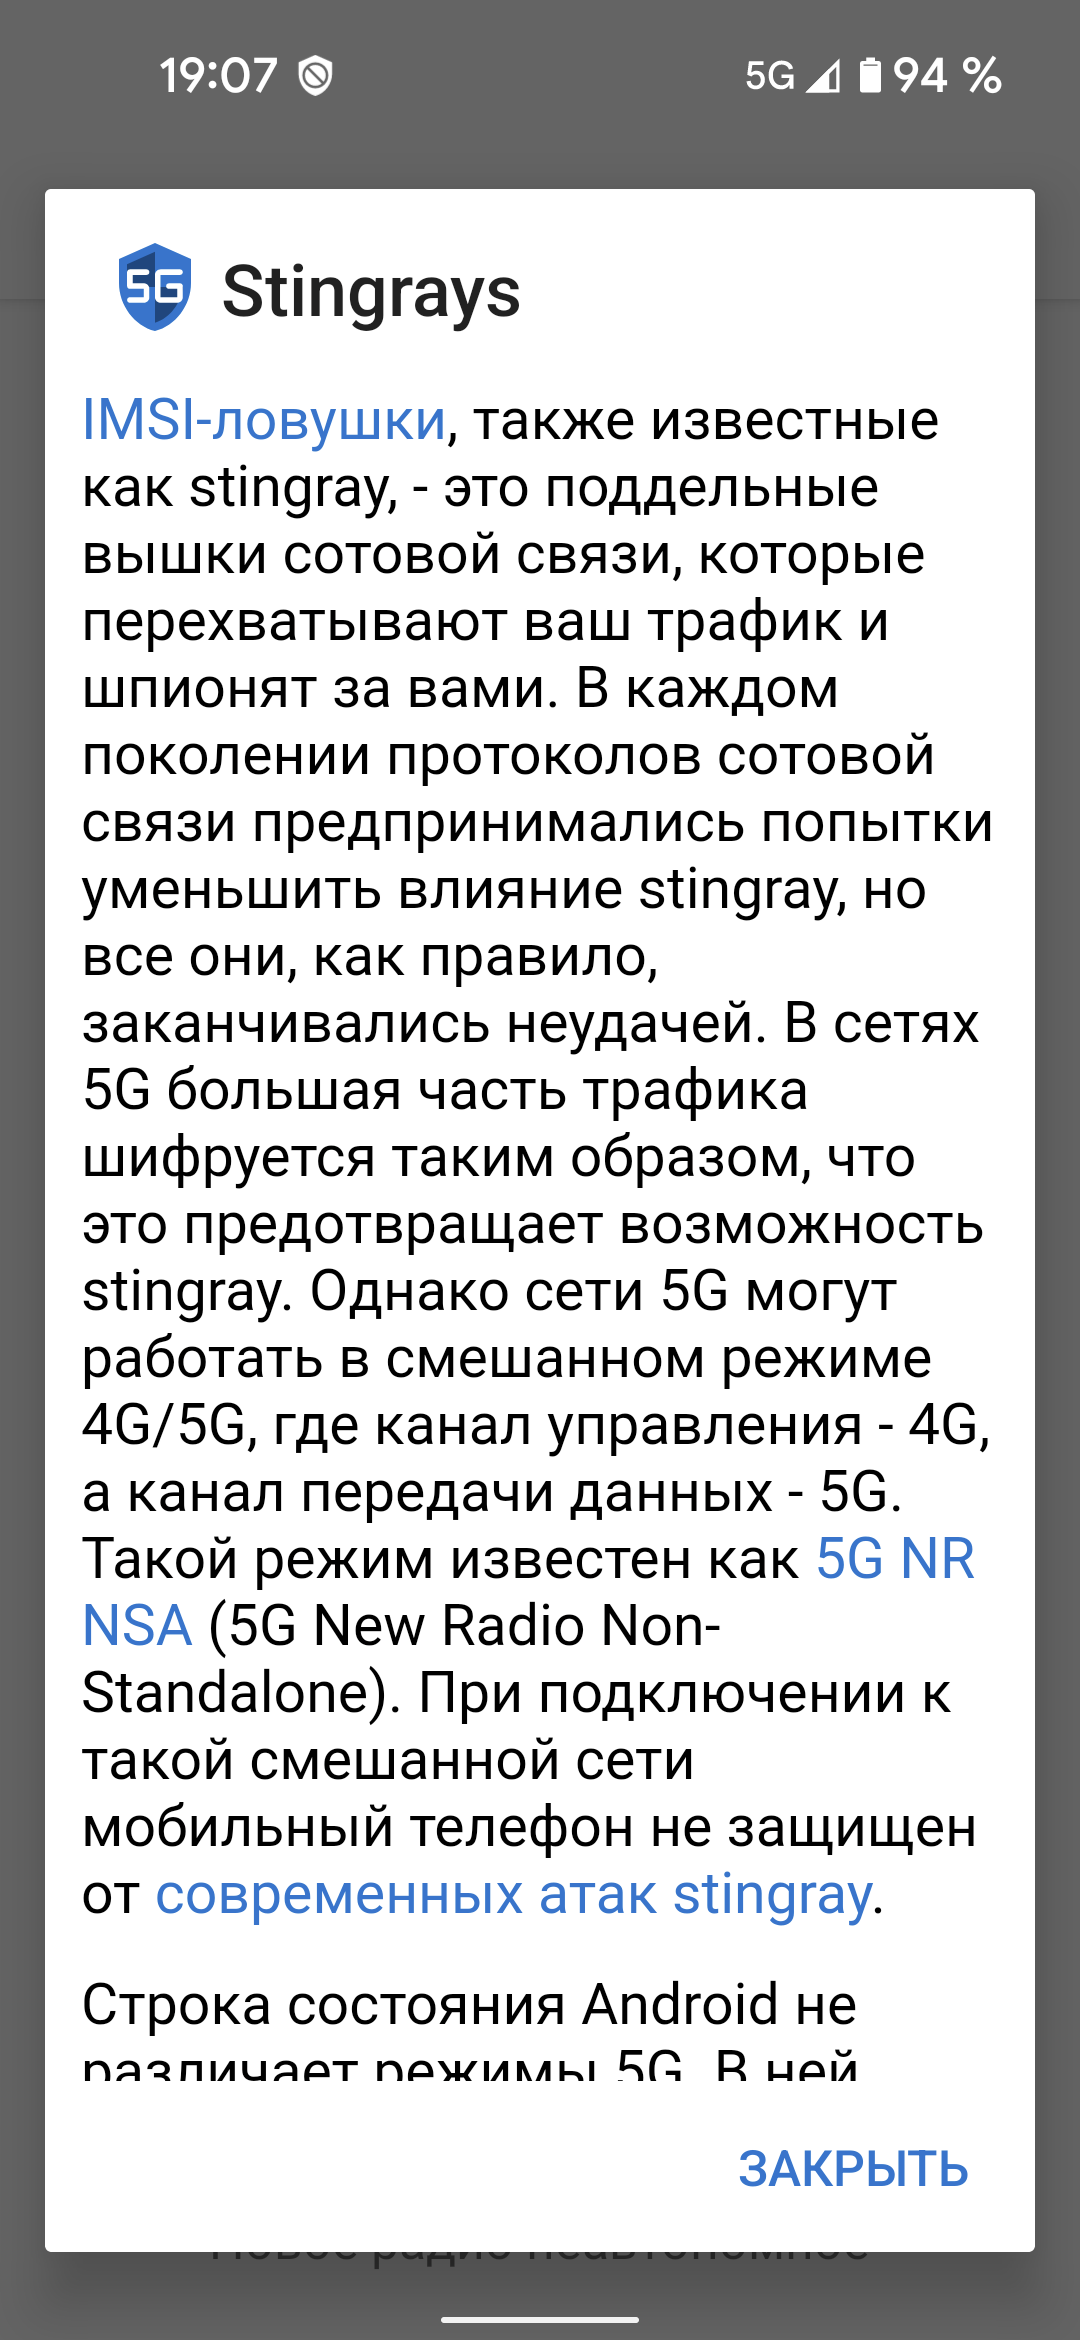 fastlane/metadata/android/ru-RU/images/phoneScreenshots/03-Stingrays-ru.png